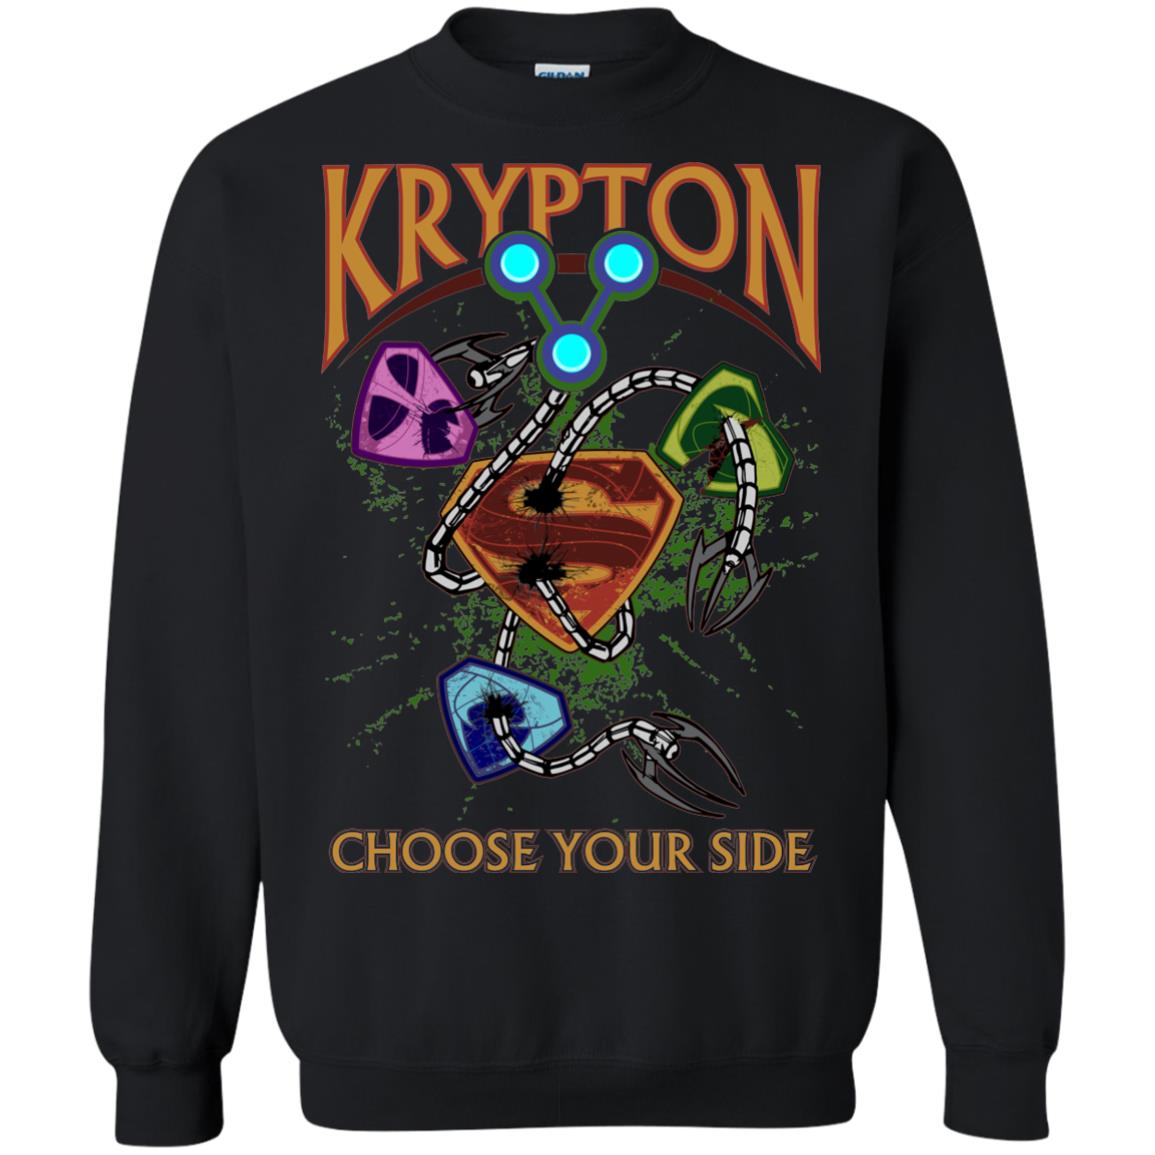 Chose your Side Krypton Crewneck Pullover Sweatshirt  8 oz.